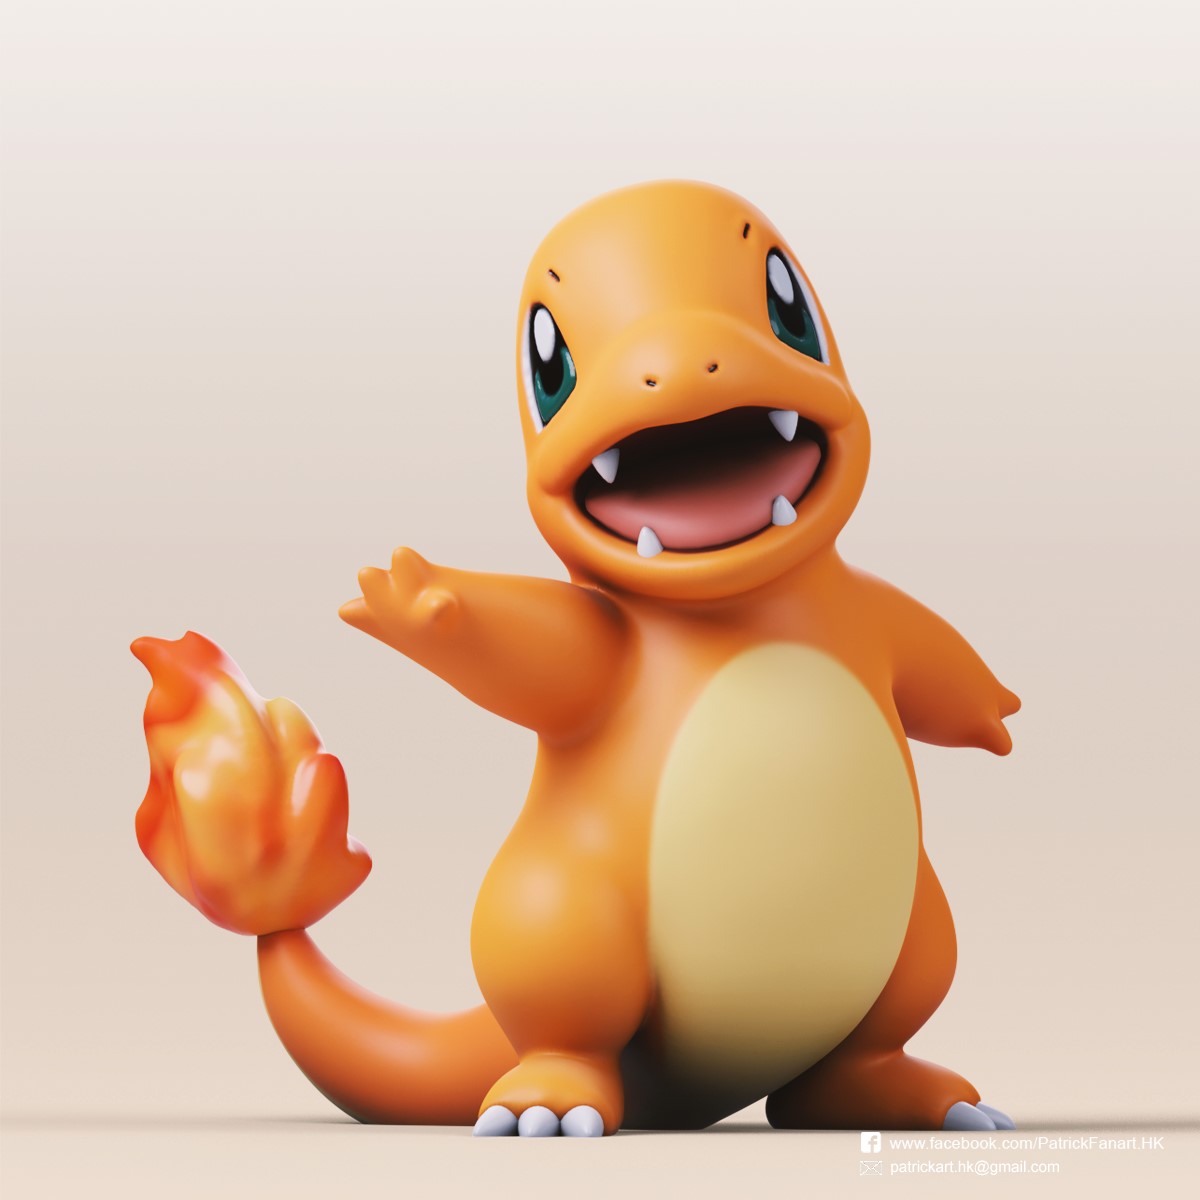 3D Printed Pokemon: Get Your Favorite Pokemon 3D Print Today